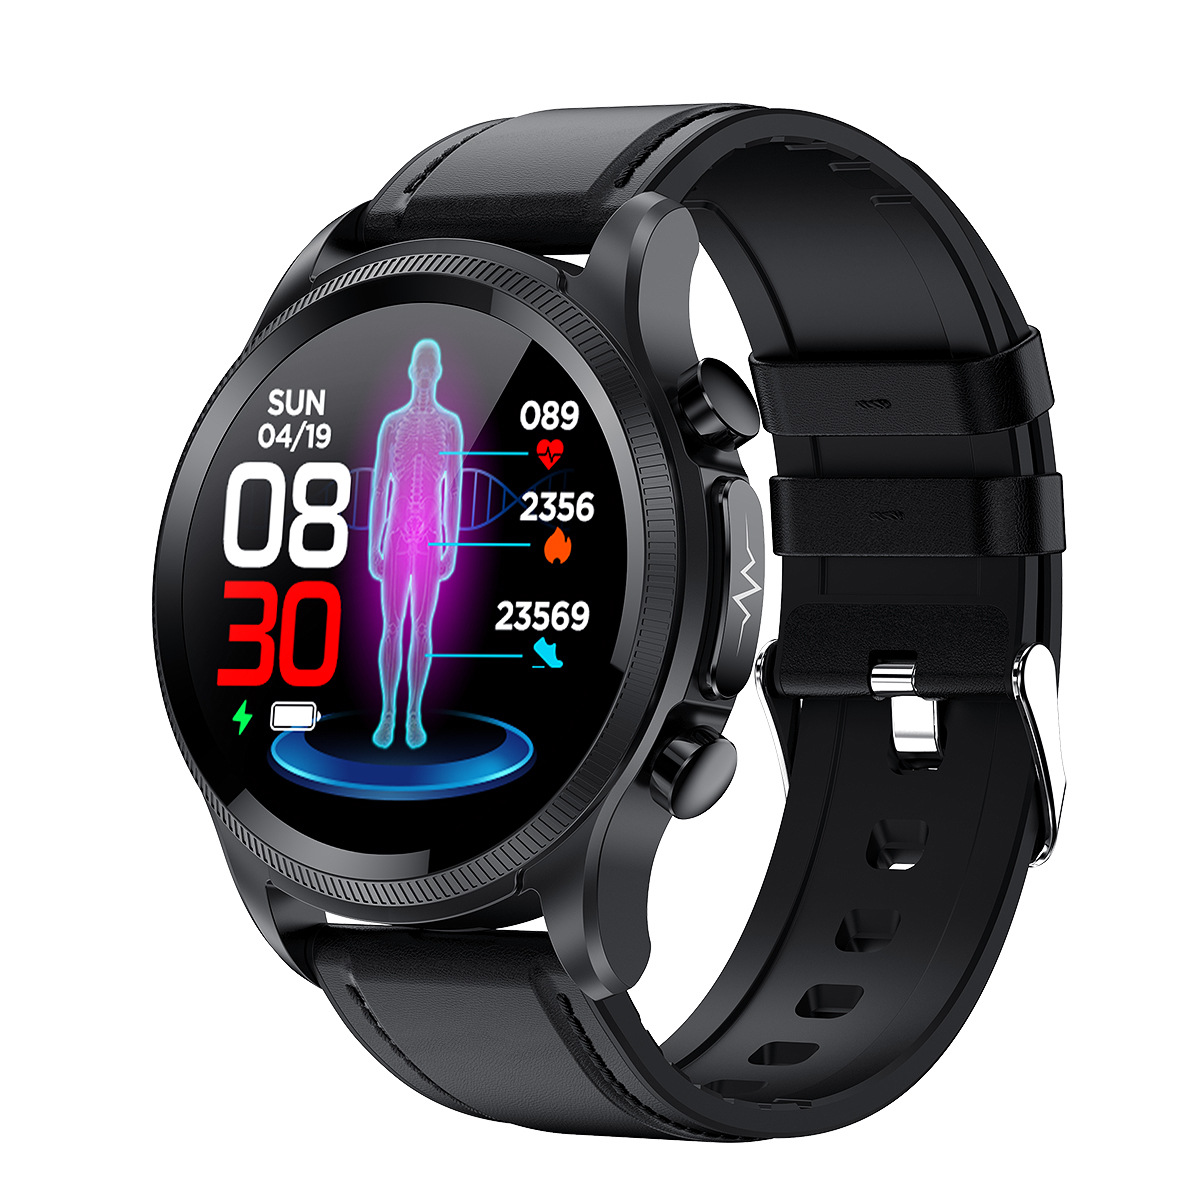 Orologio intelligente da uomo Smartwatch Bracciale Bluetooth impermeabile Sport Fitness Tracker Pressione sanguigna Cardiofrequenzimetro Orologi Android ios